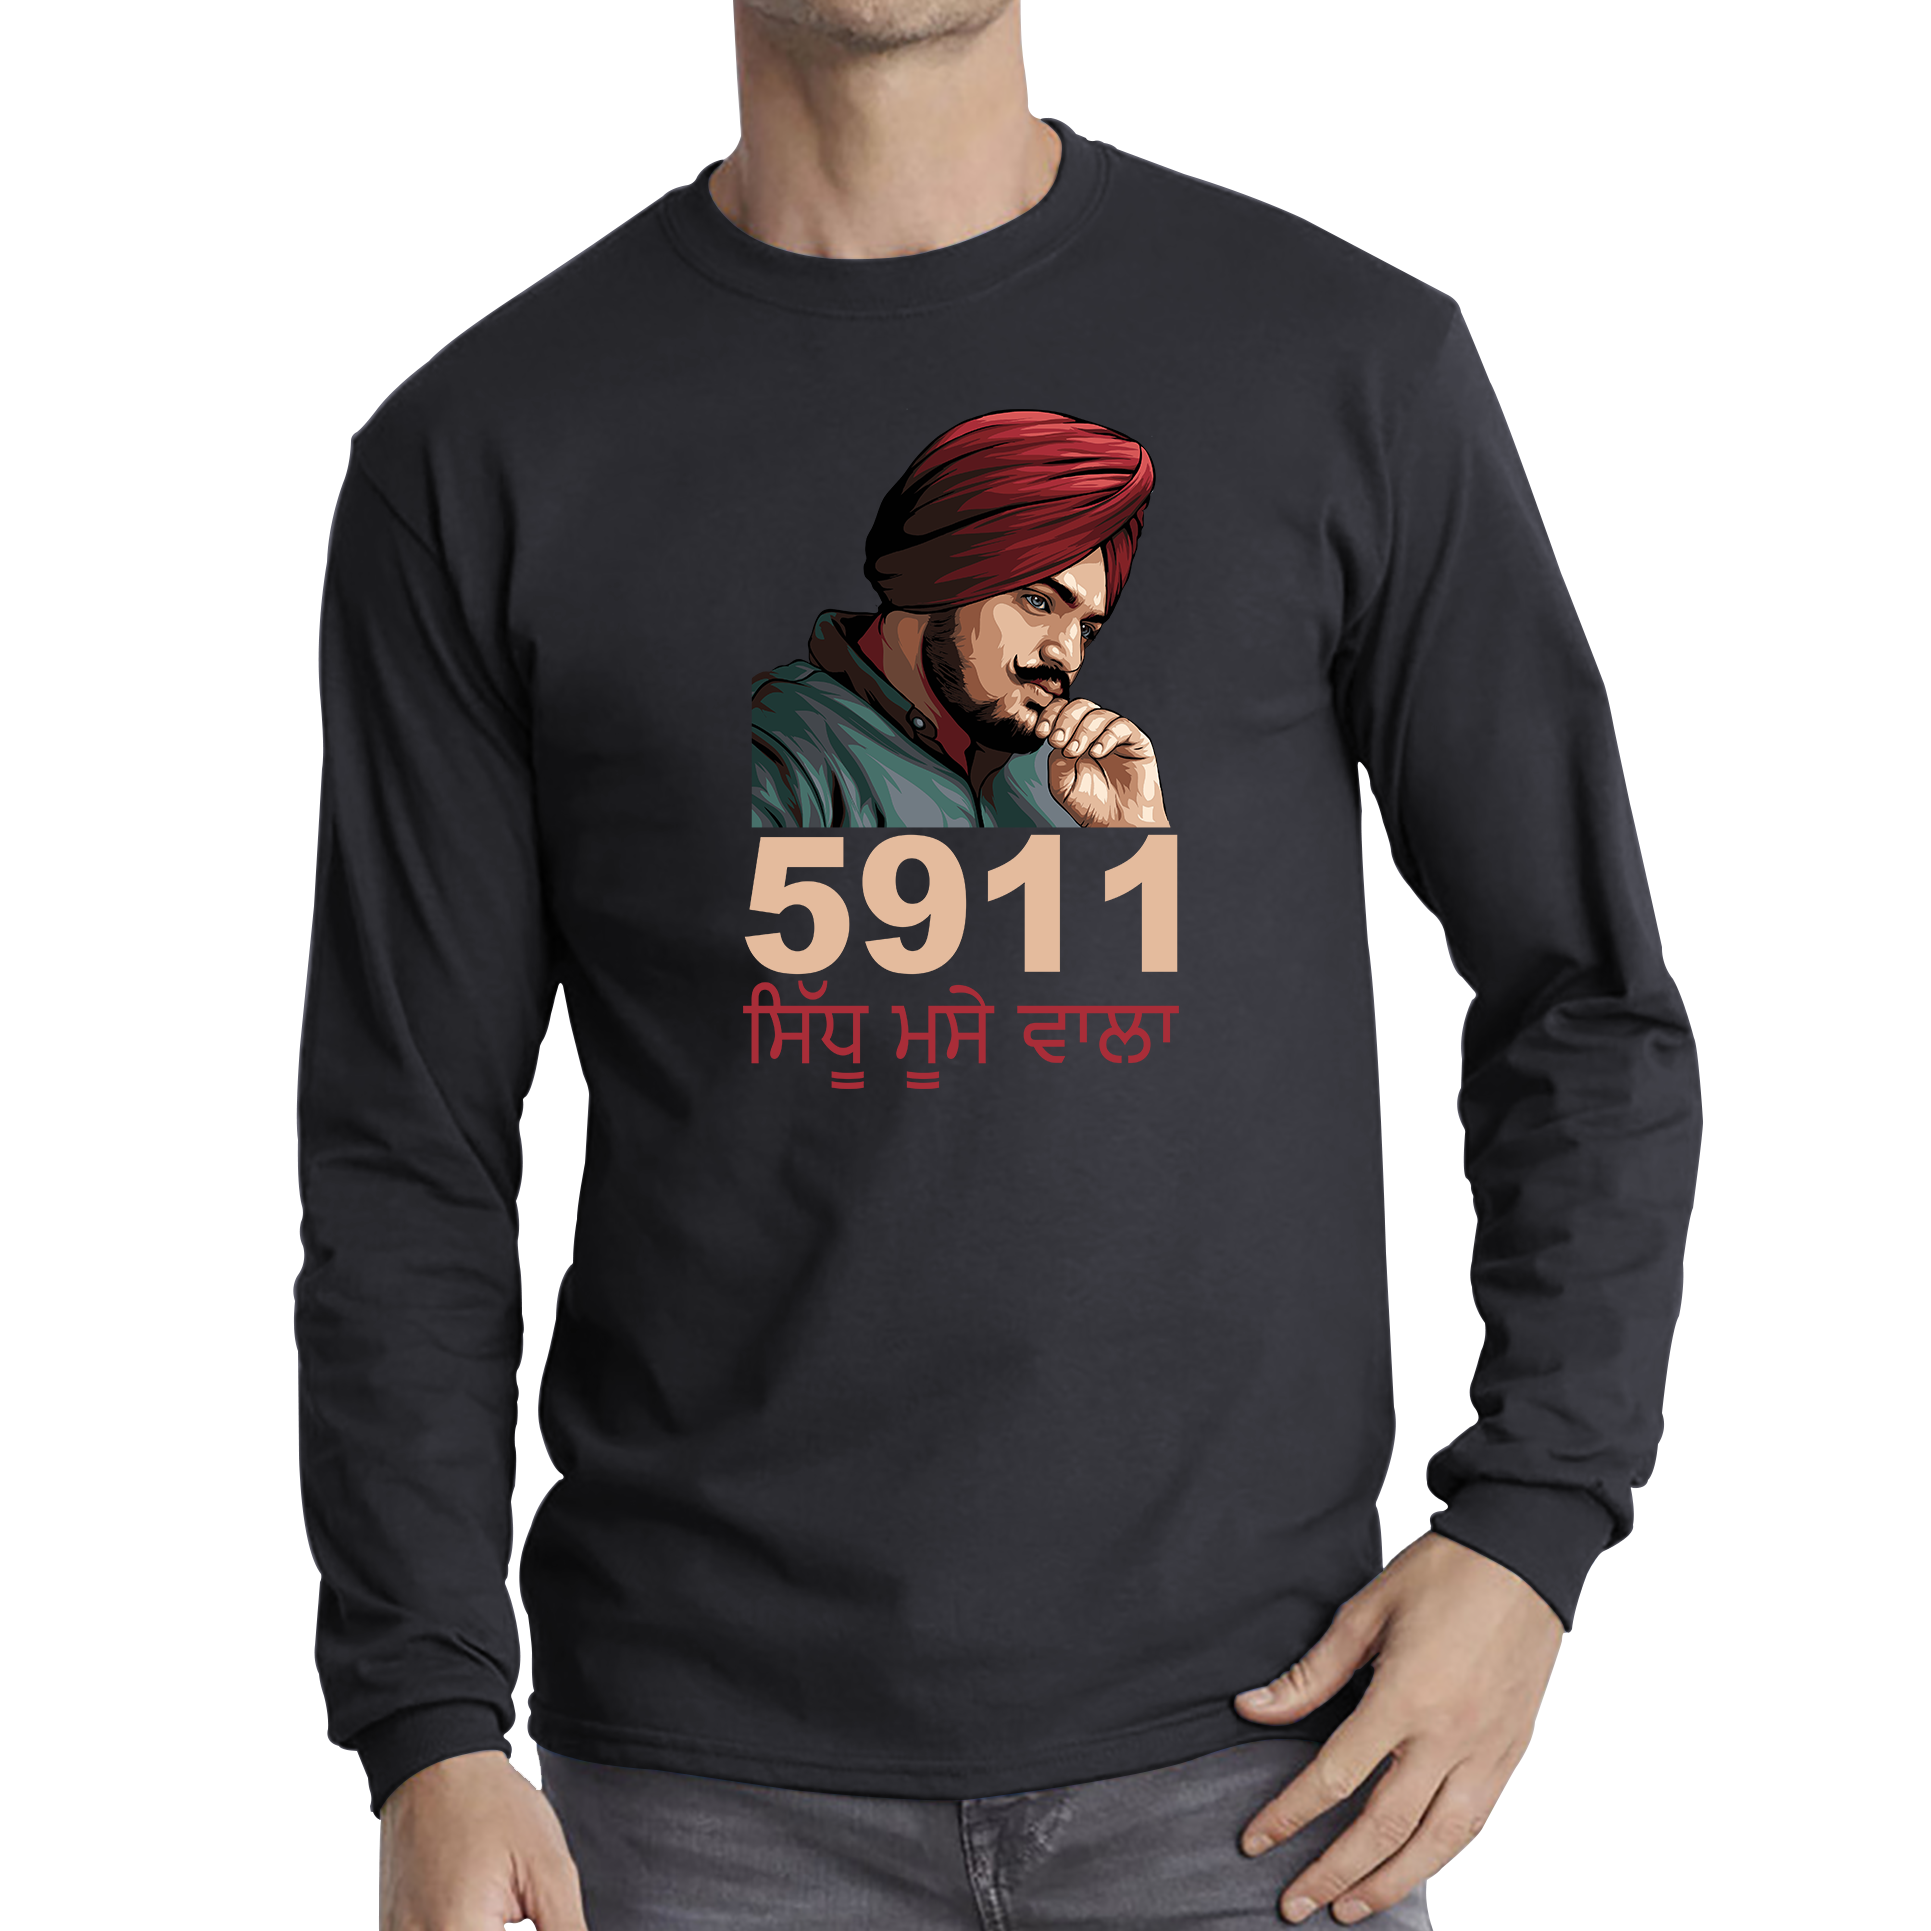 Sidhu Moose Wala 5911 Song Shirt Legend Punjabi Indian Singer Tribute To Legend Sidhu Moose Wala Long Sleeve T Shirt